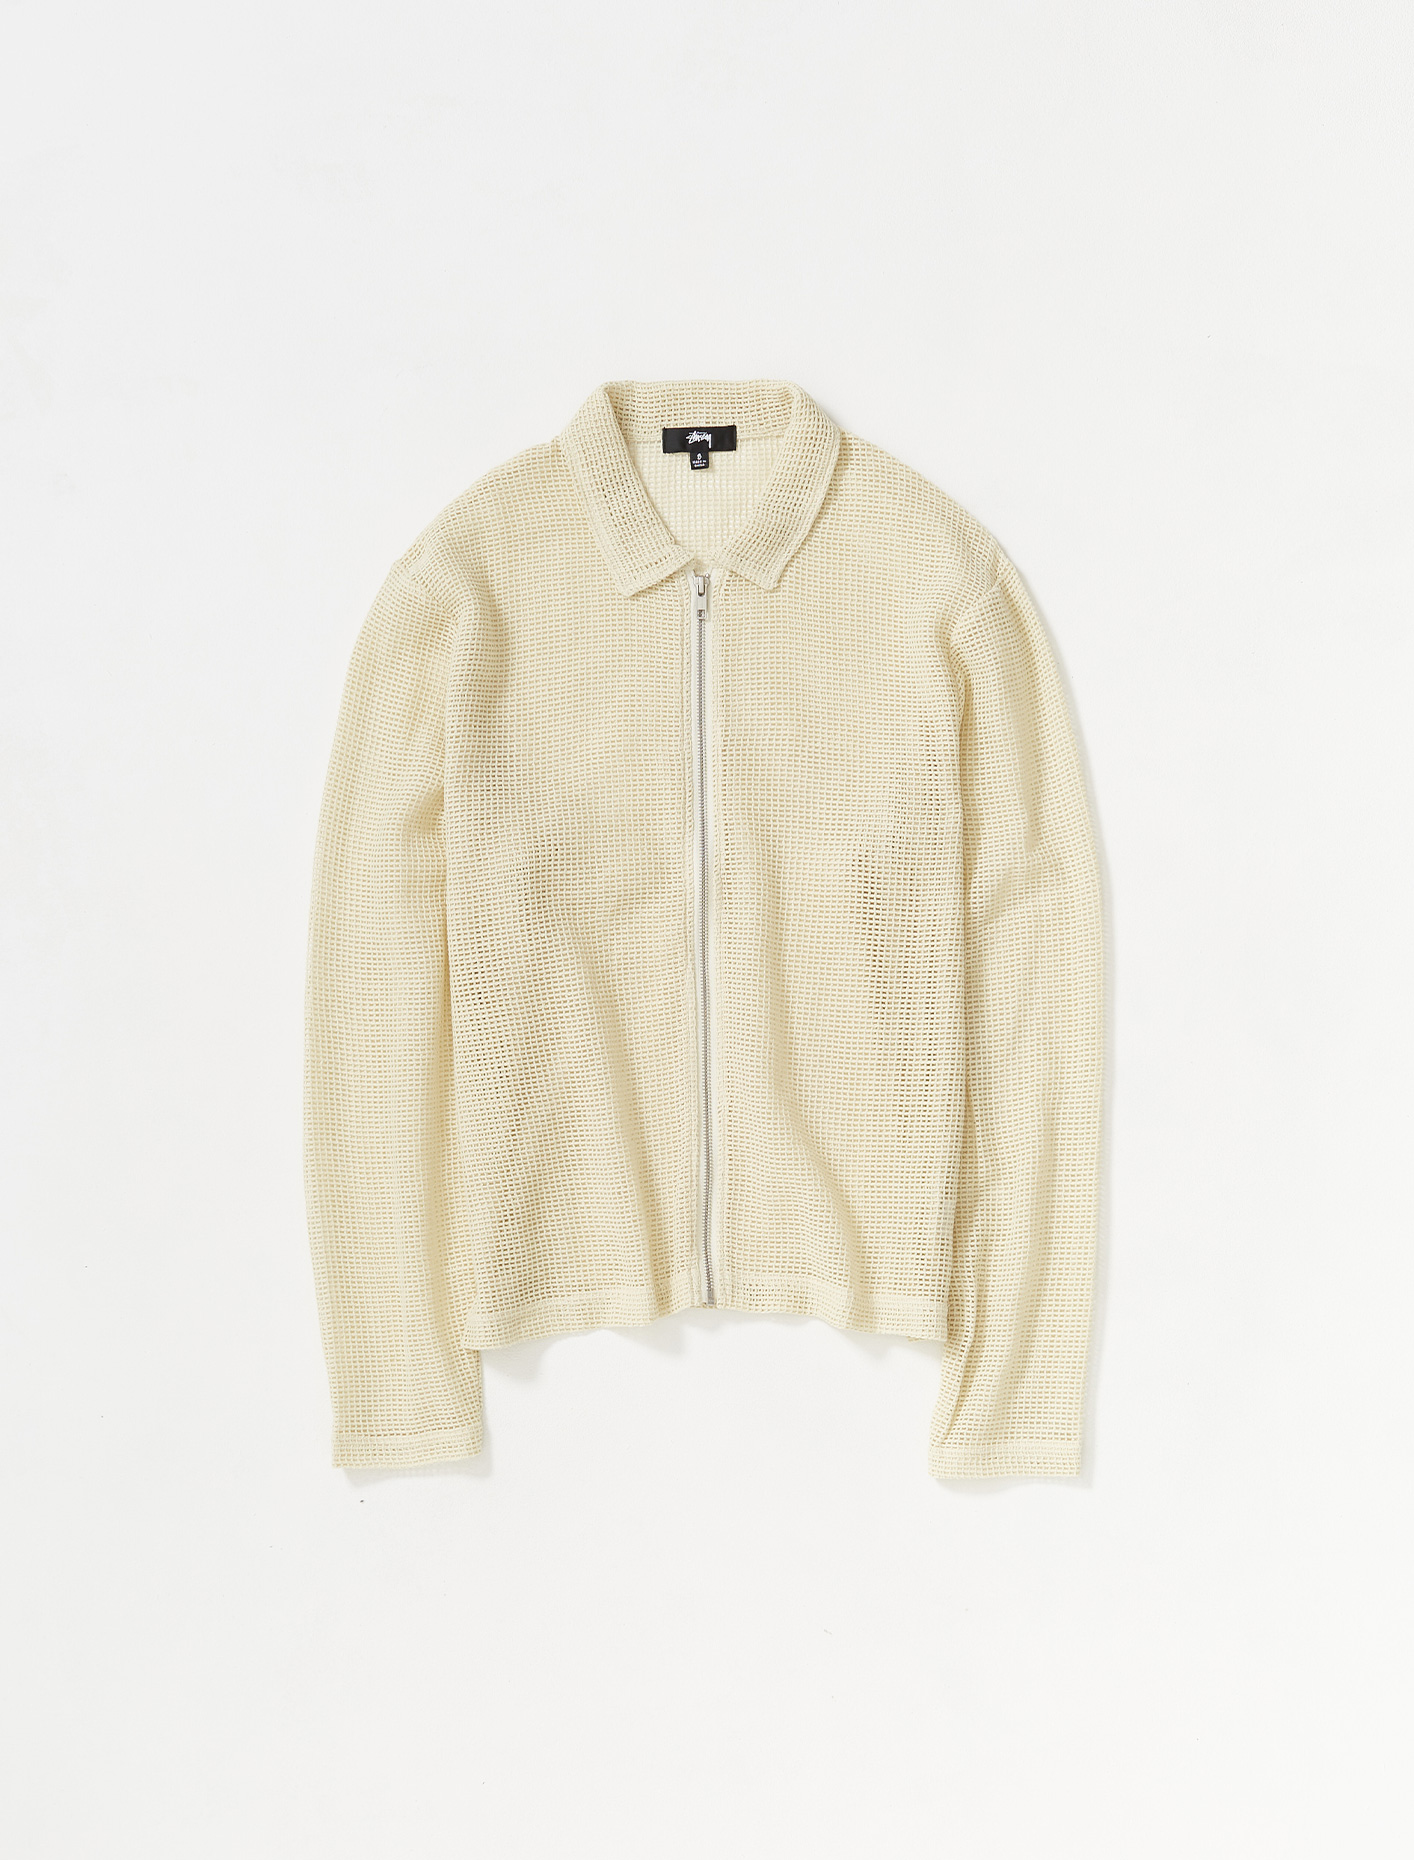 Stüssy Cotton Mesh Zip Long Sleeve Shirt in Natural | Voo Store 